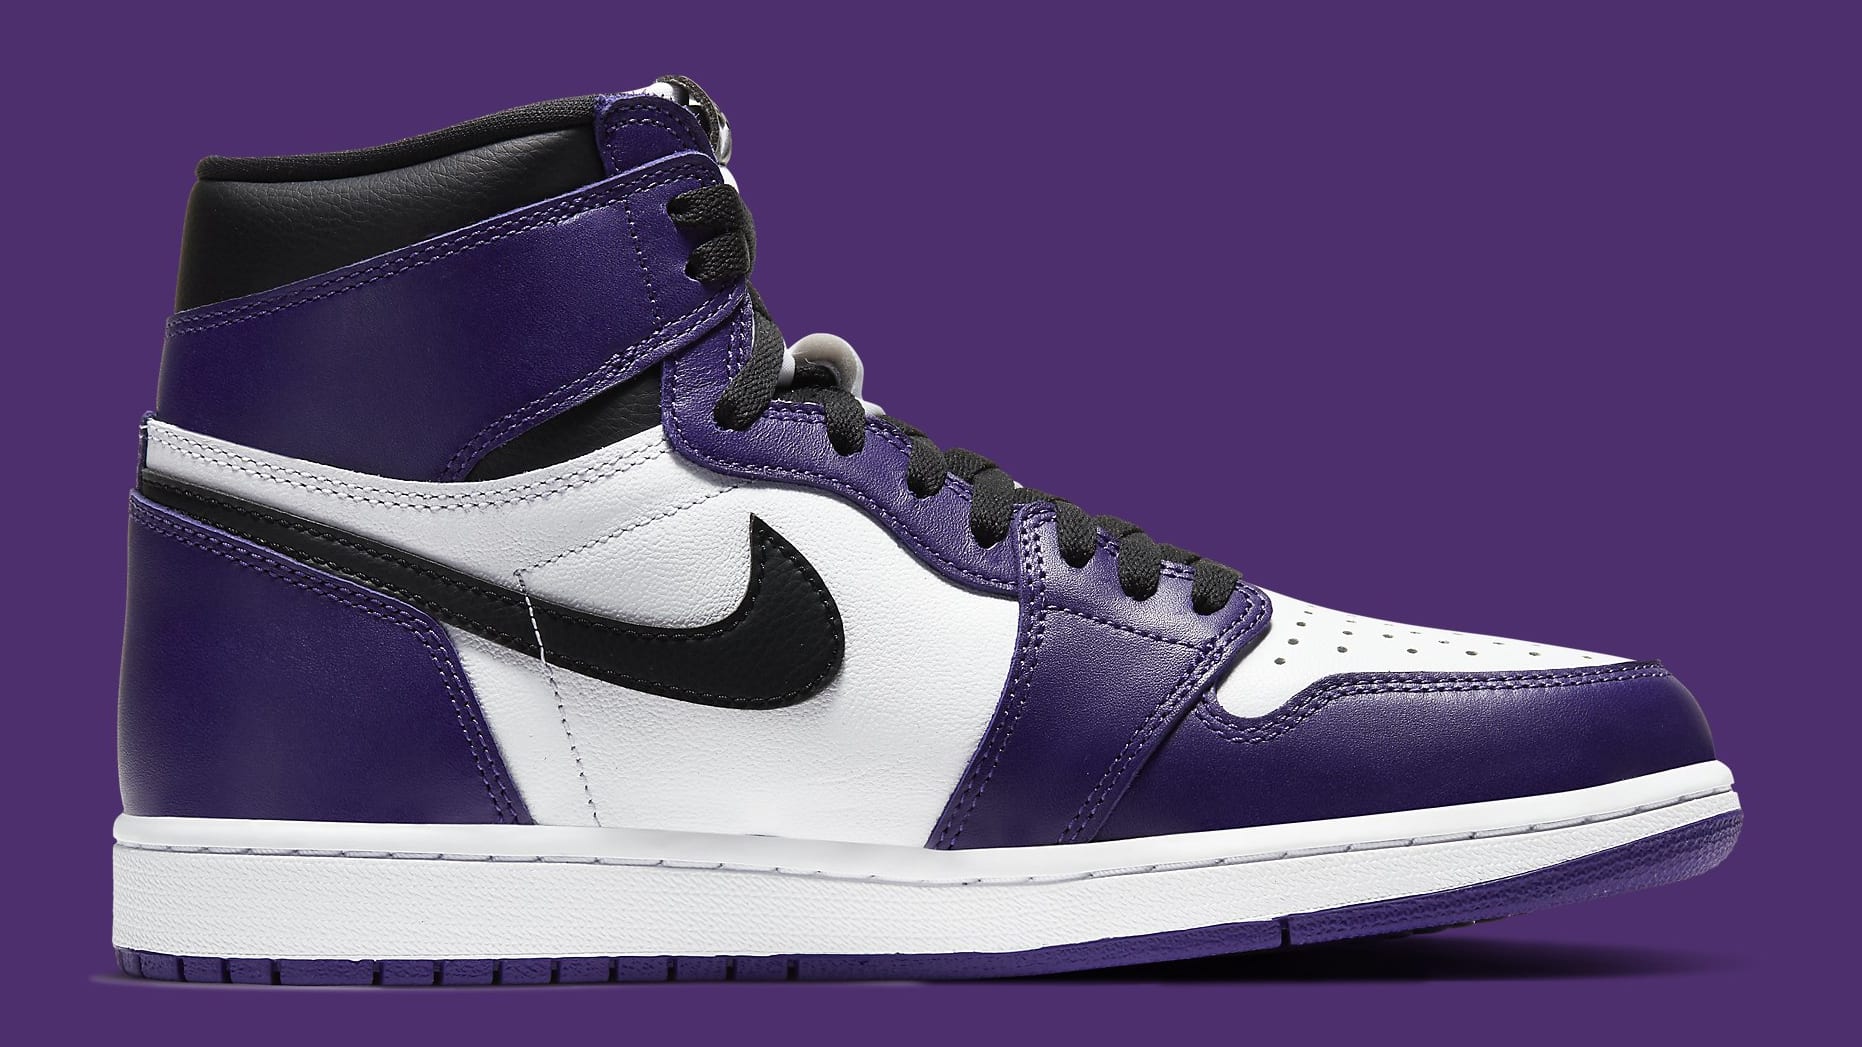 Court Purple' Air Jordan 1 Gets a New Release Date